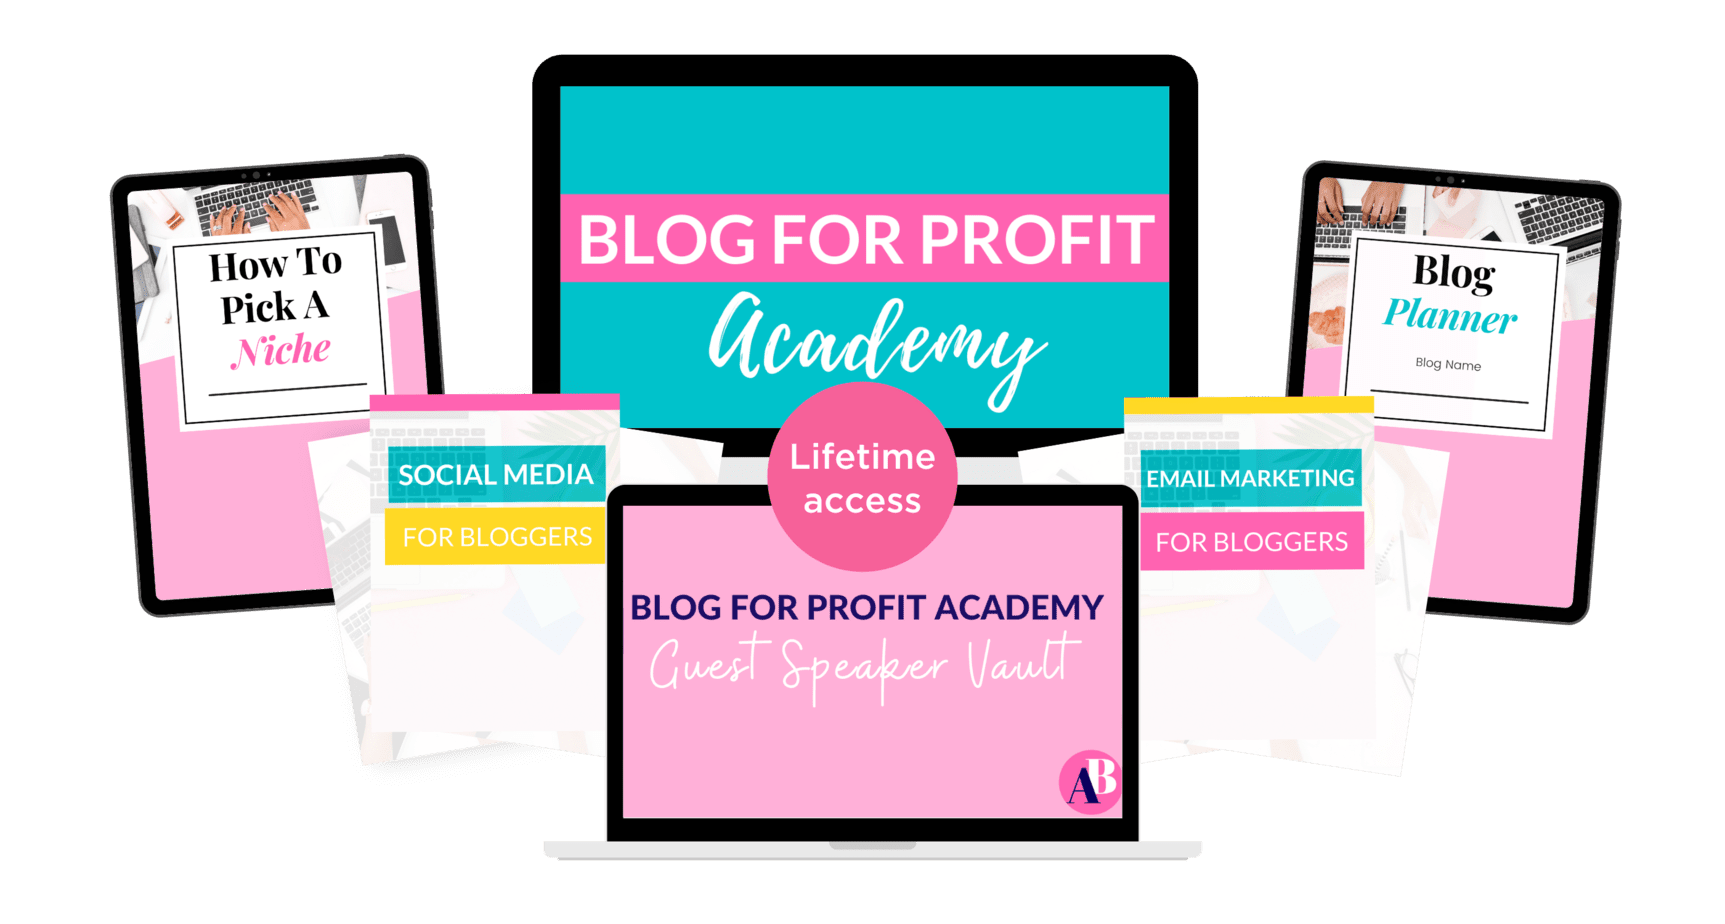 Blog for profit academy